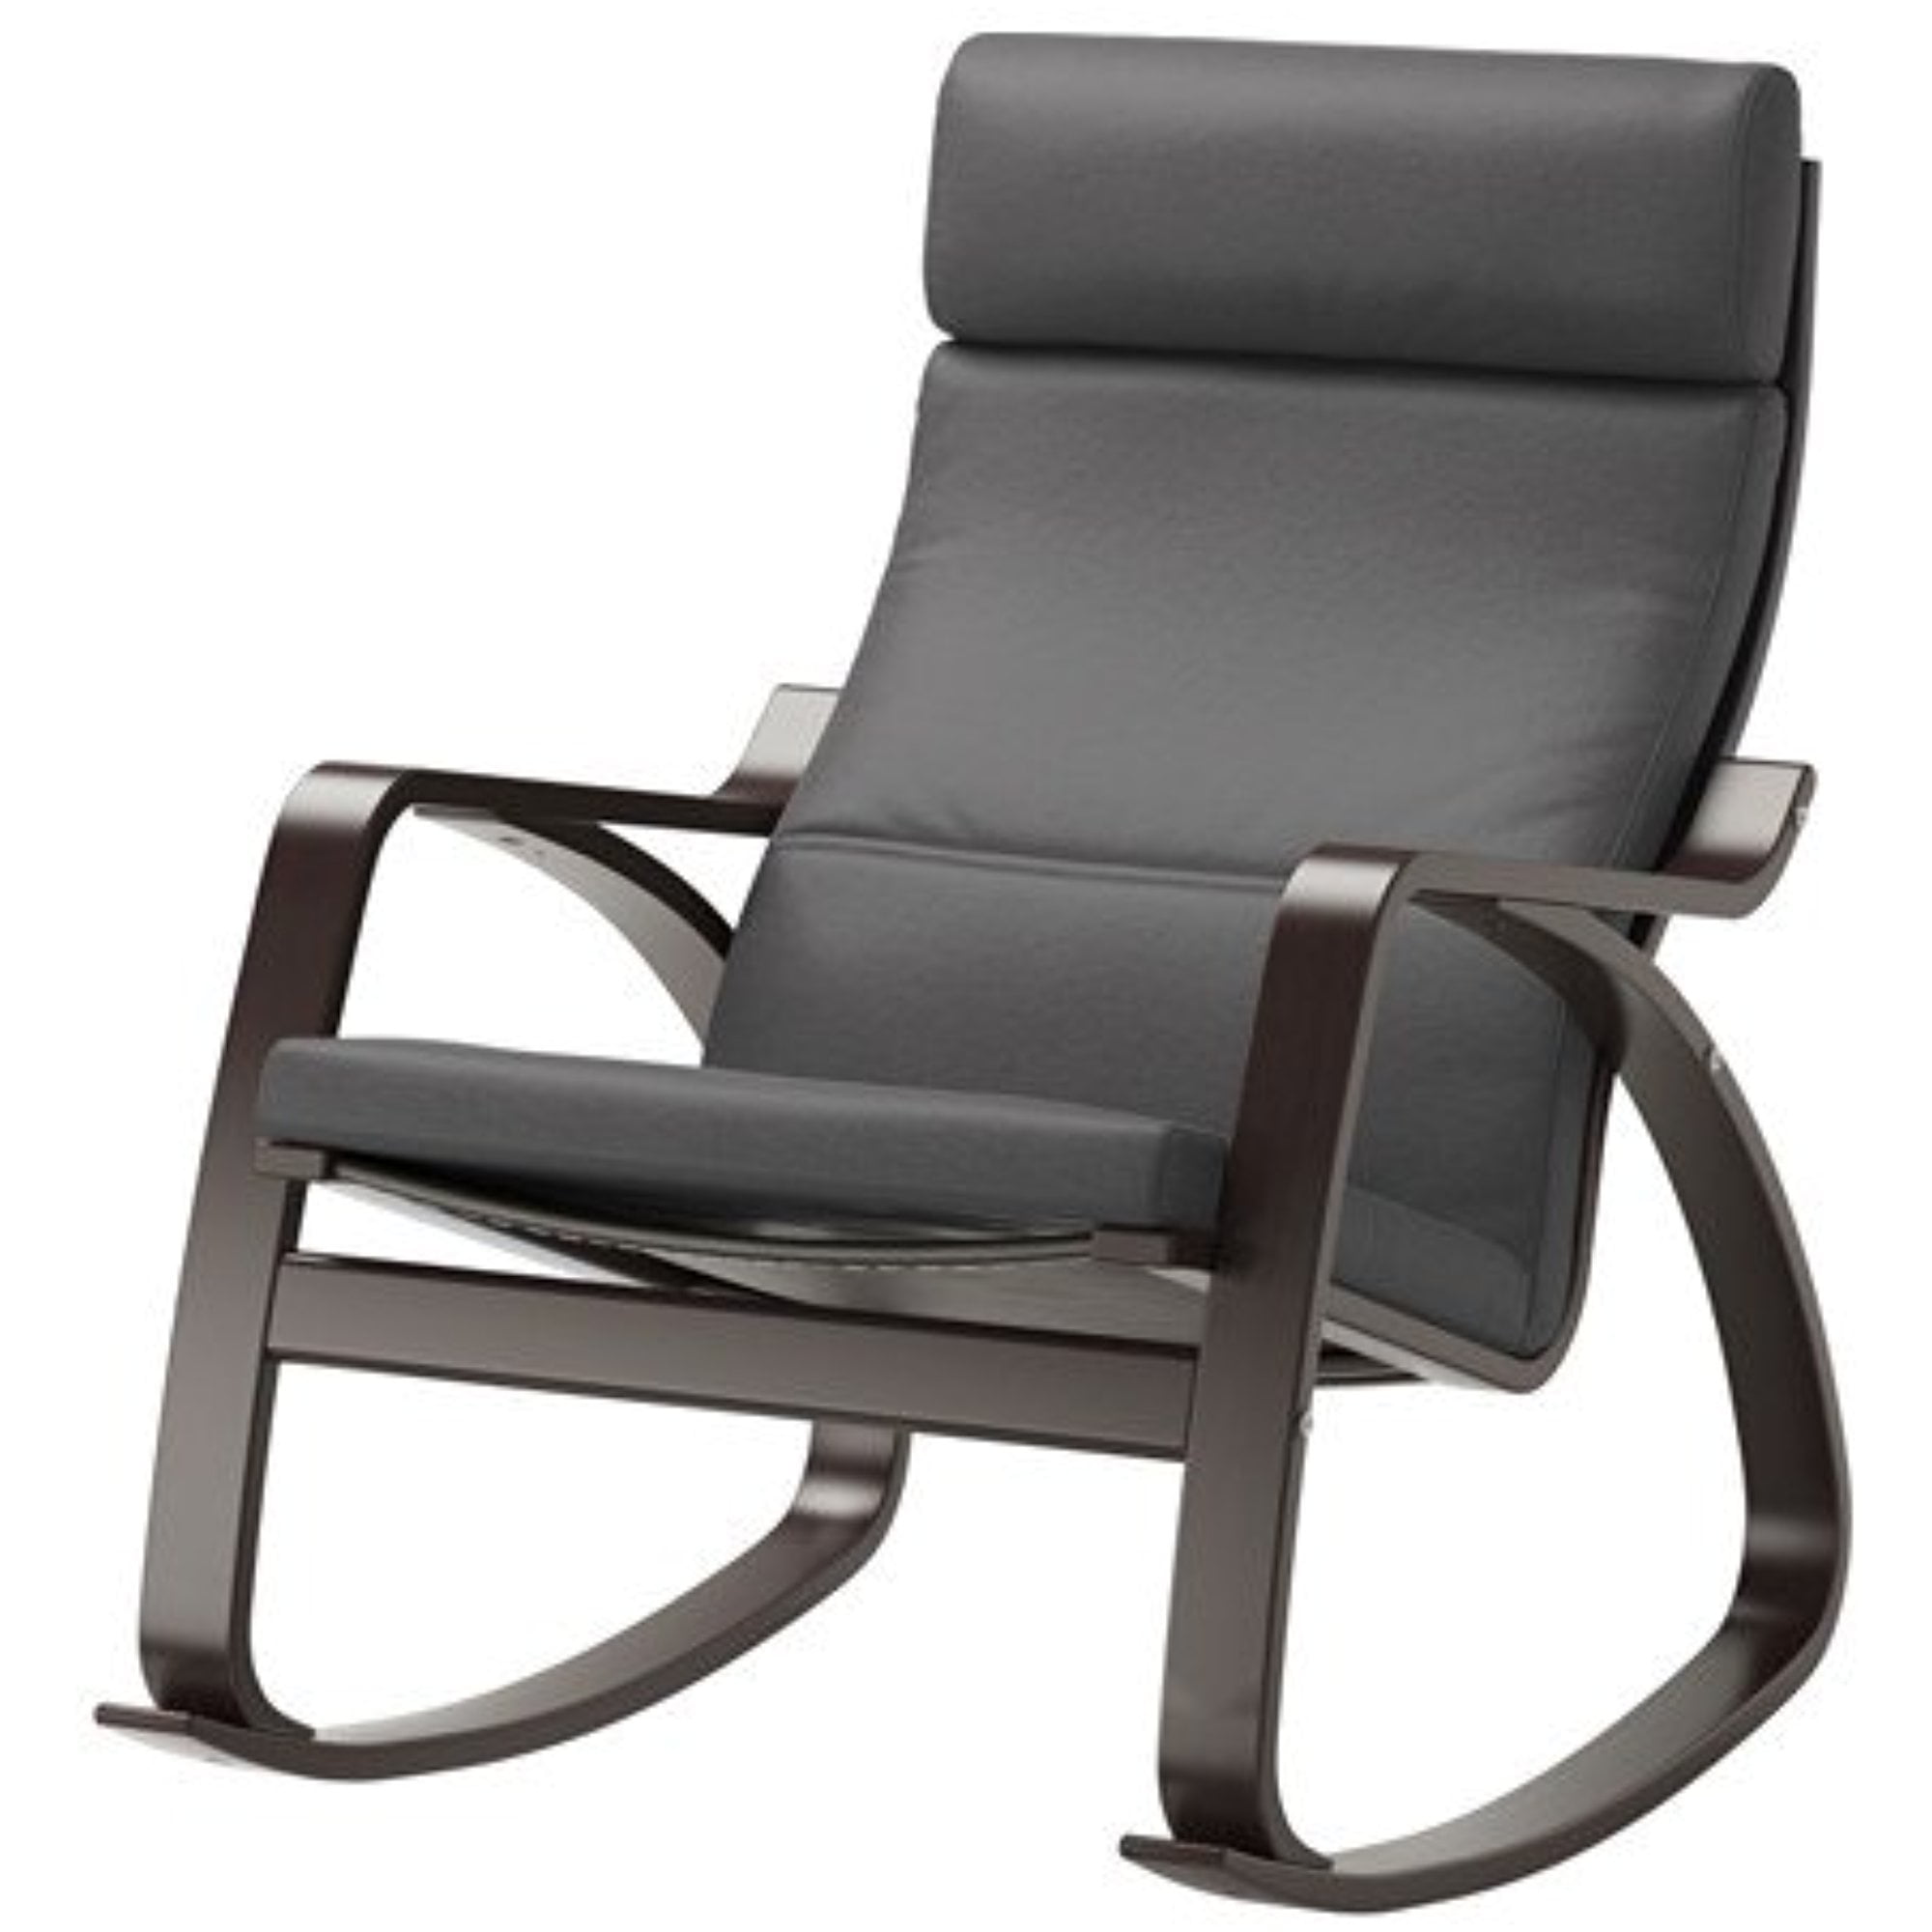 Ikea Rocking chair, black-brown, Finnsta gray 18202.29214.630 - Walmart.com